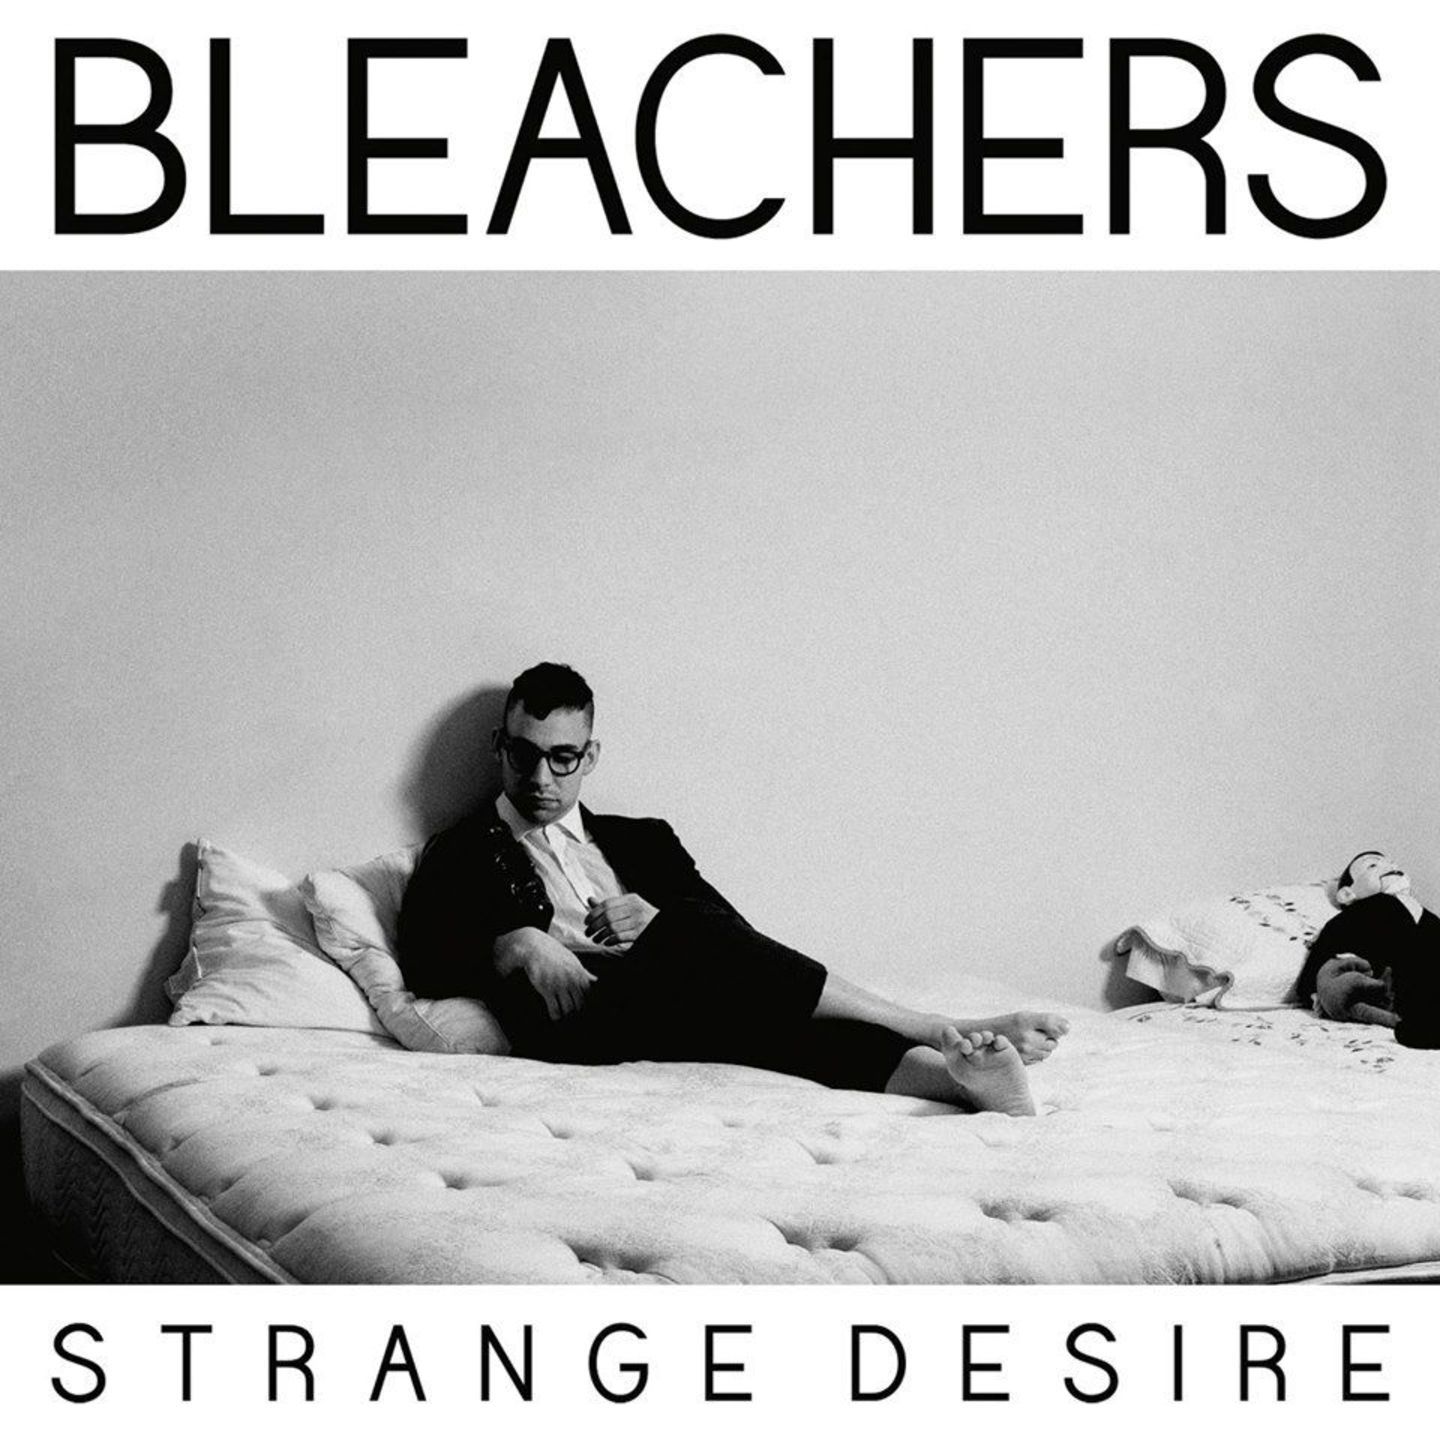 BLEACHERS - Strange Desire LP